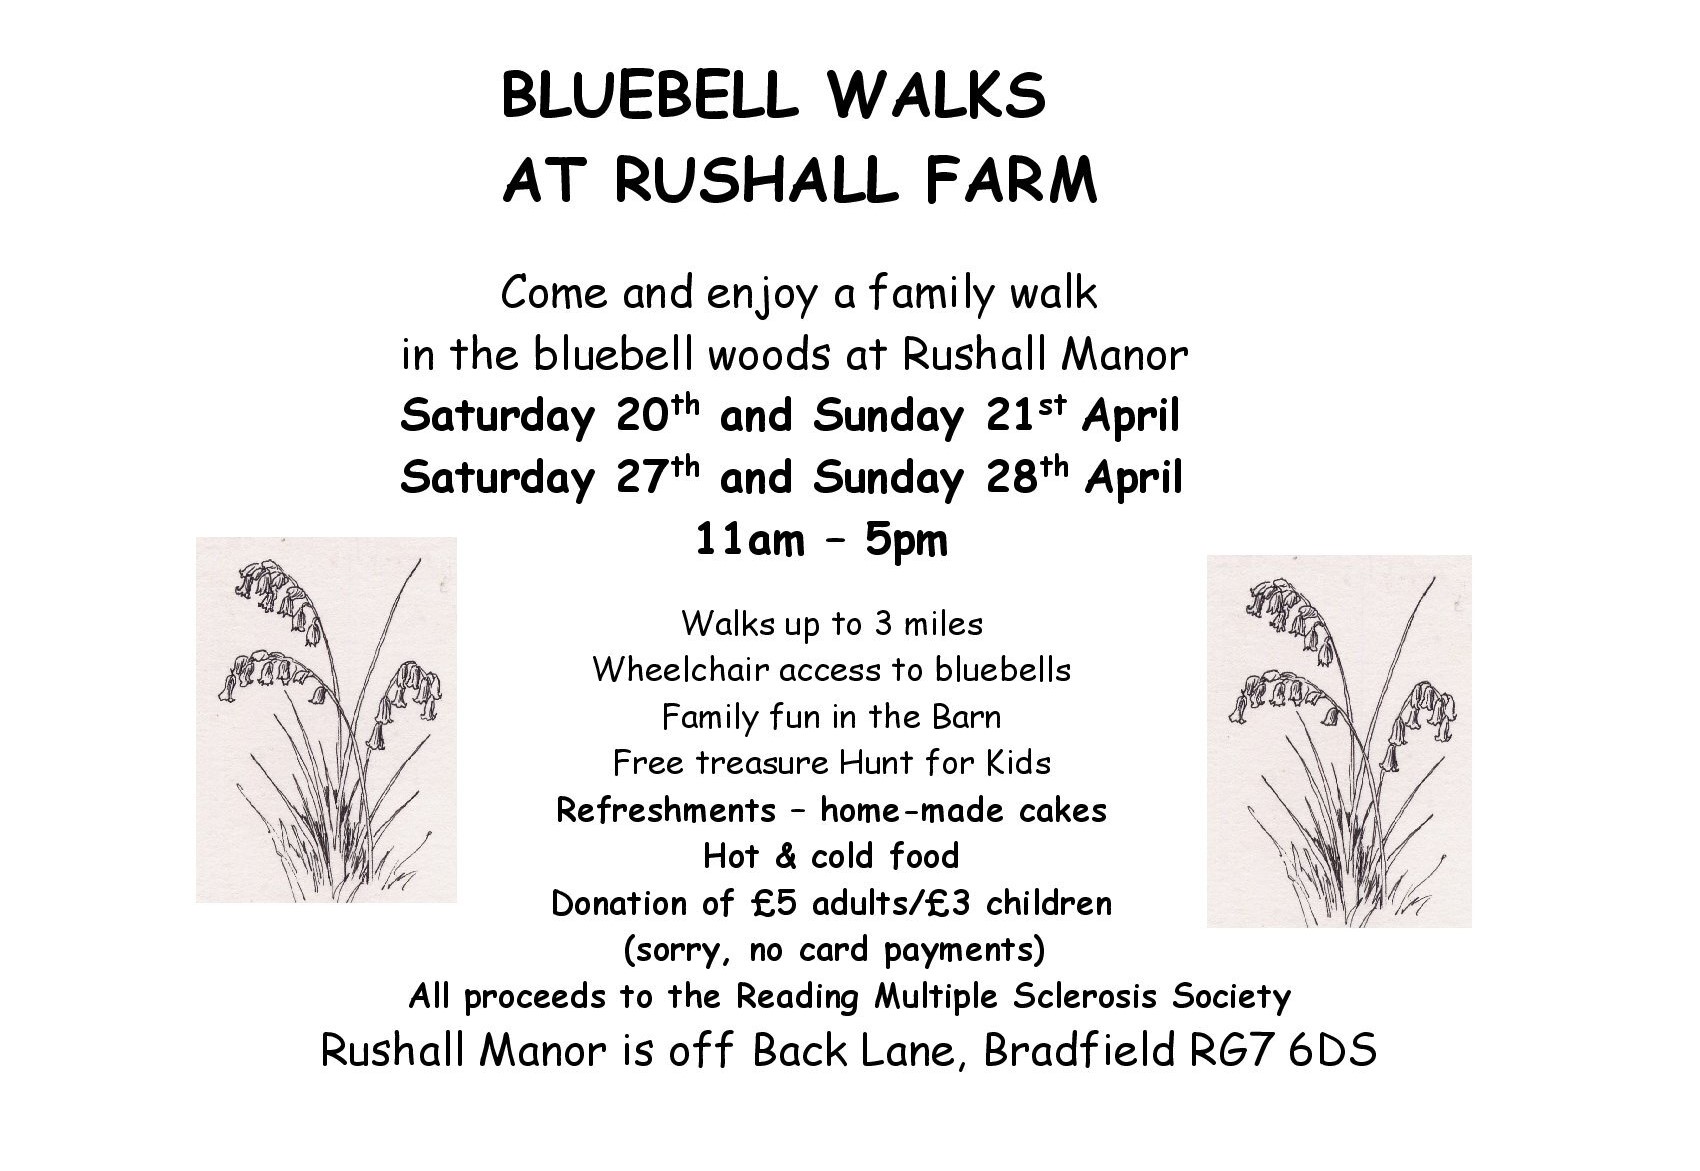 Bluebell Walks at Rushall Farm